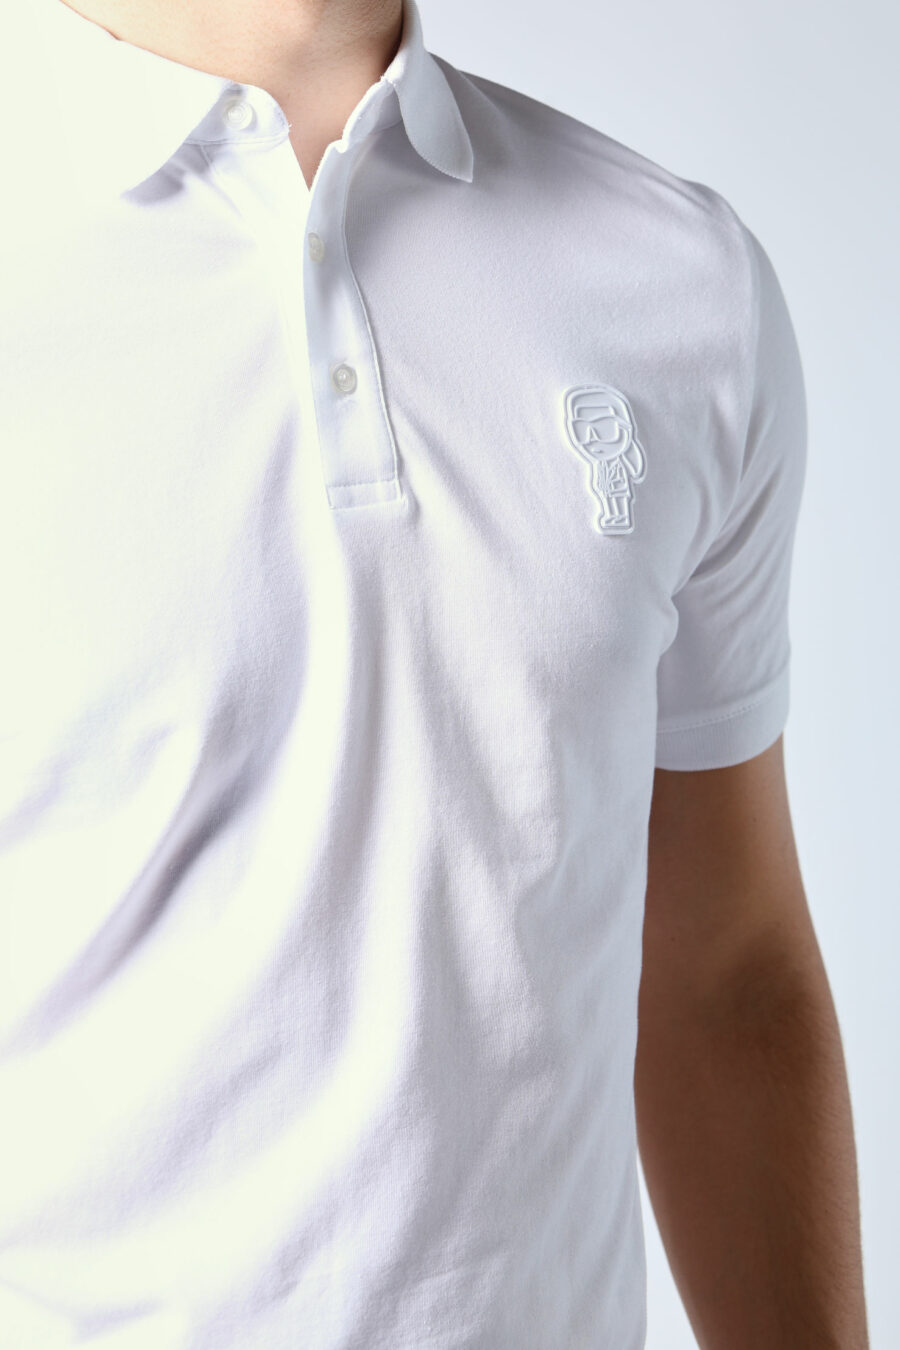 Polo blanc avec mini-logo monochrome - Untitled Catalog 05725